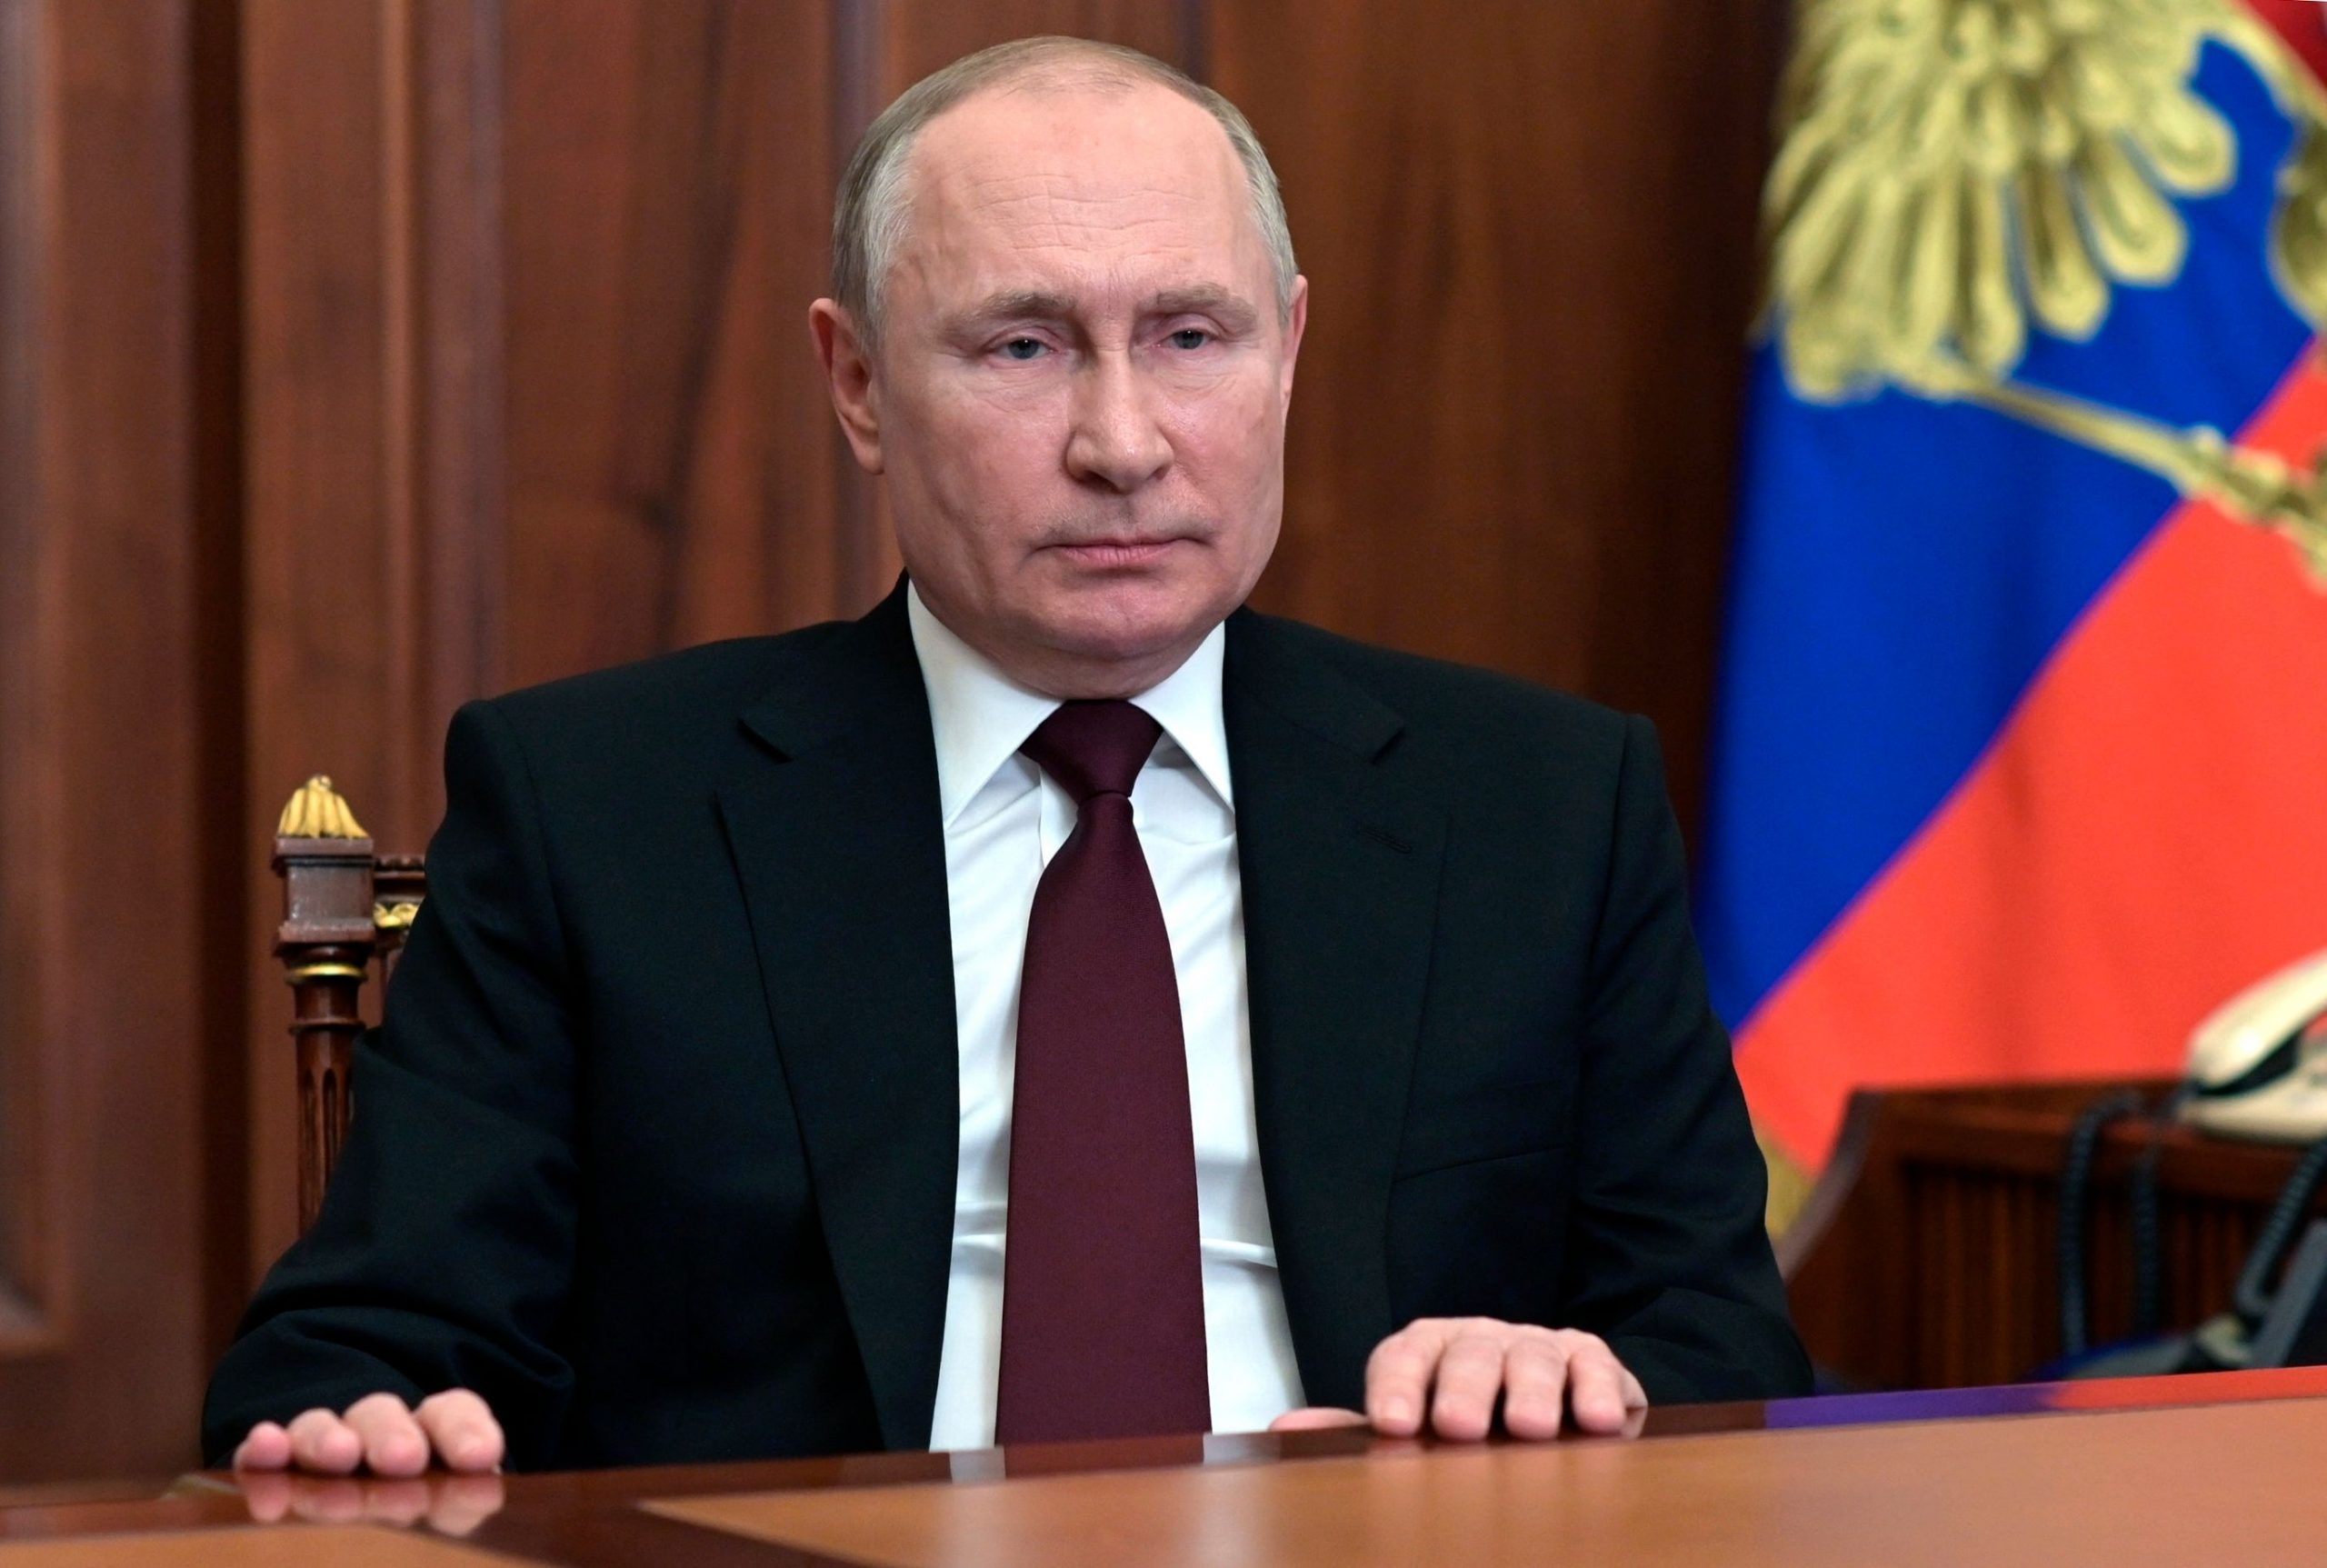 Vladimir Putin says Russia can benefit from sanctions over Ukraine invasion